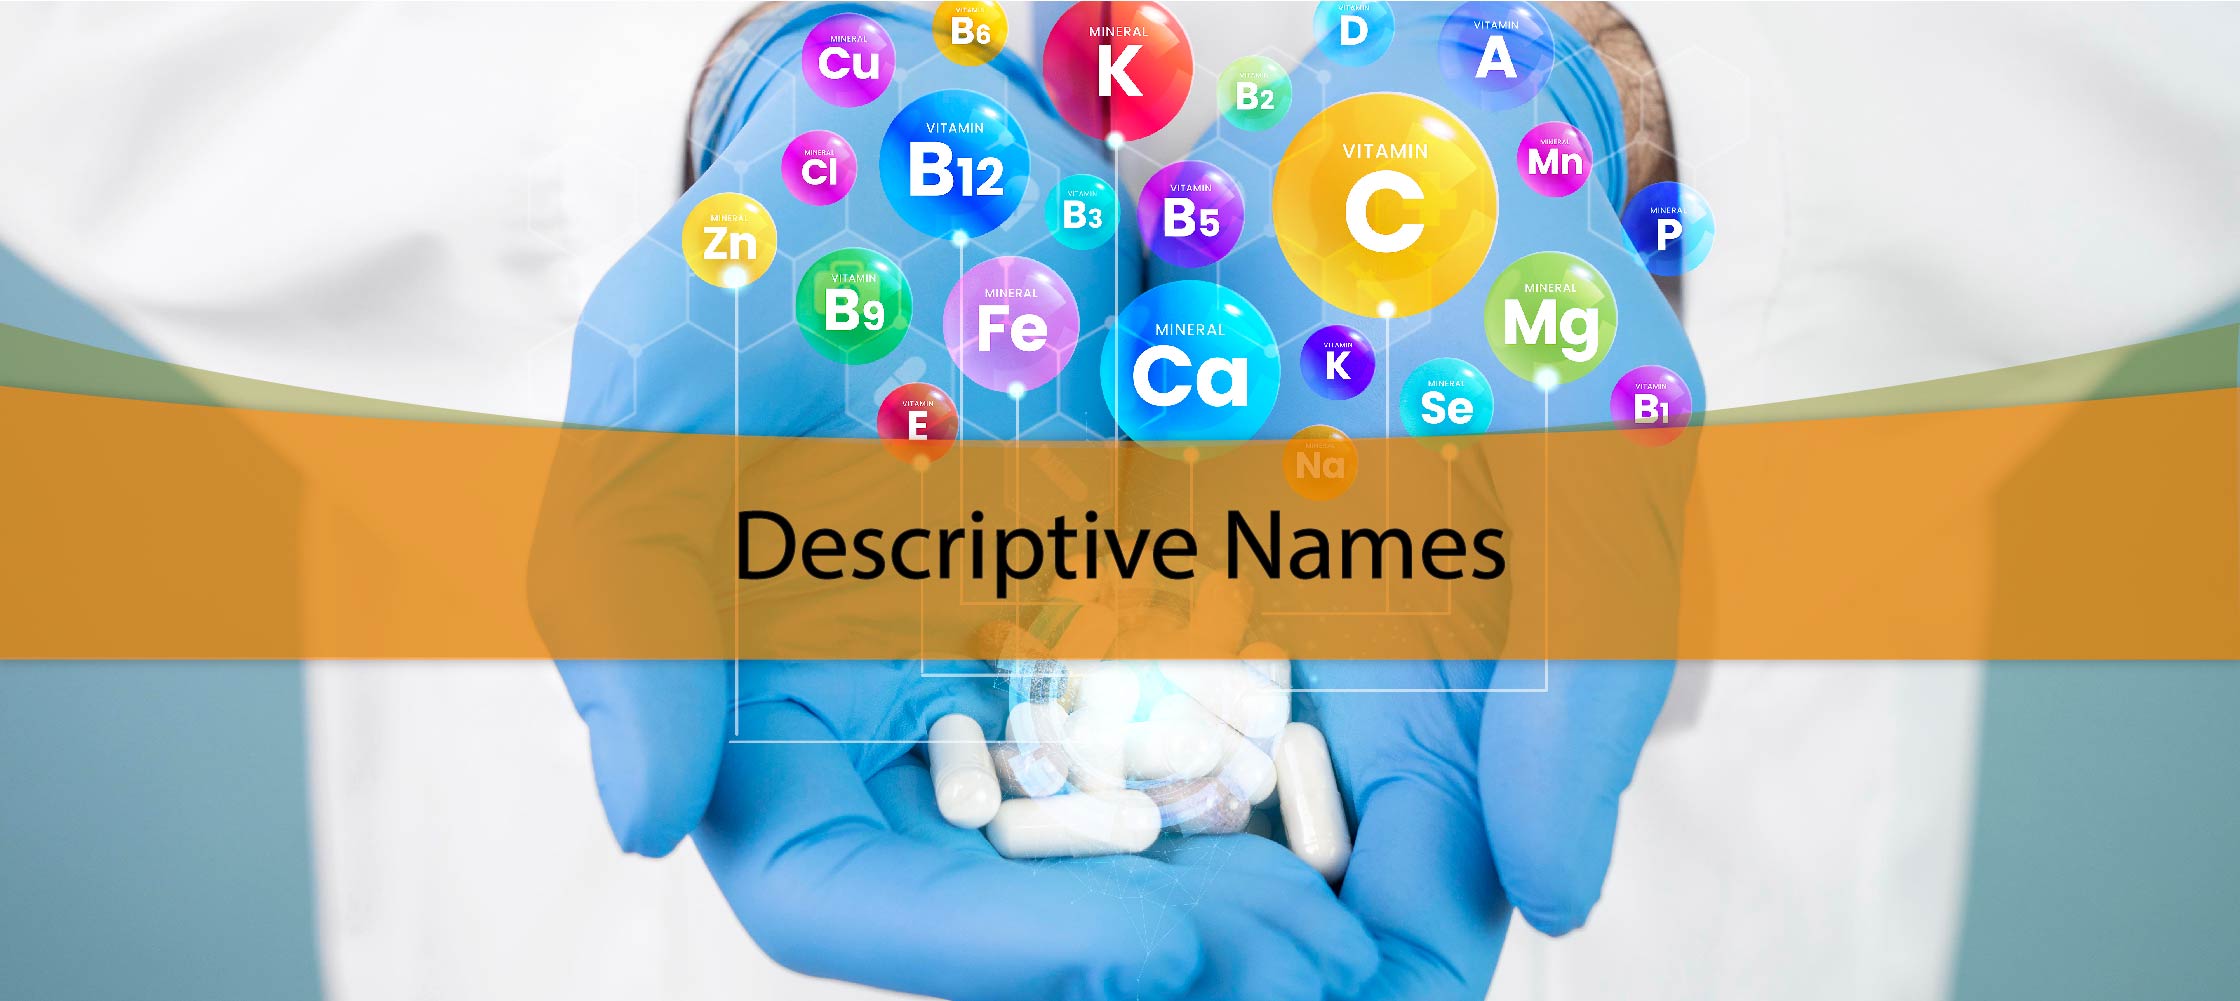 Descriptive Names